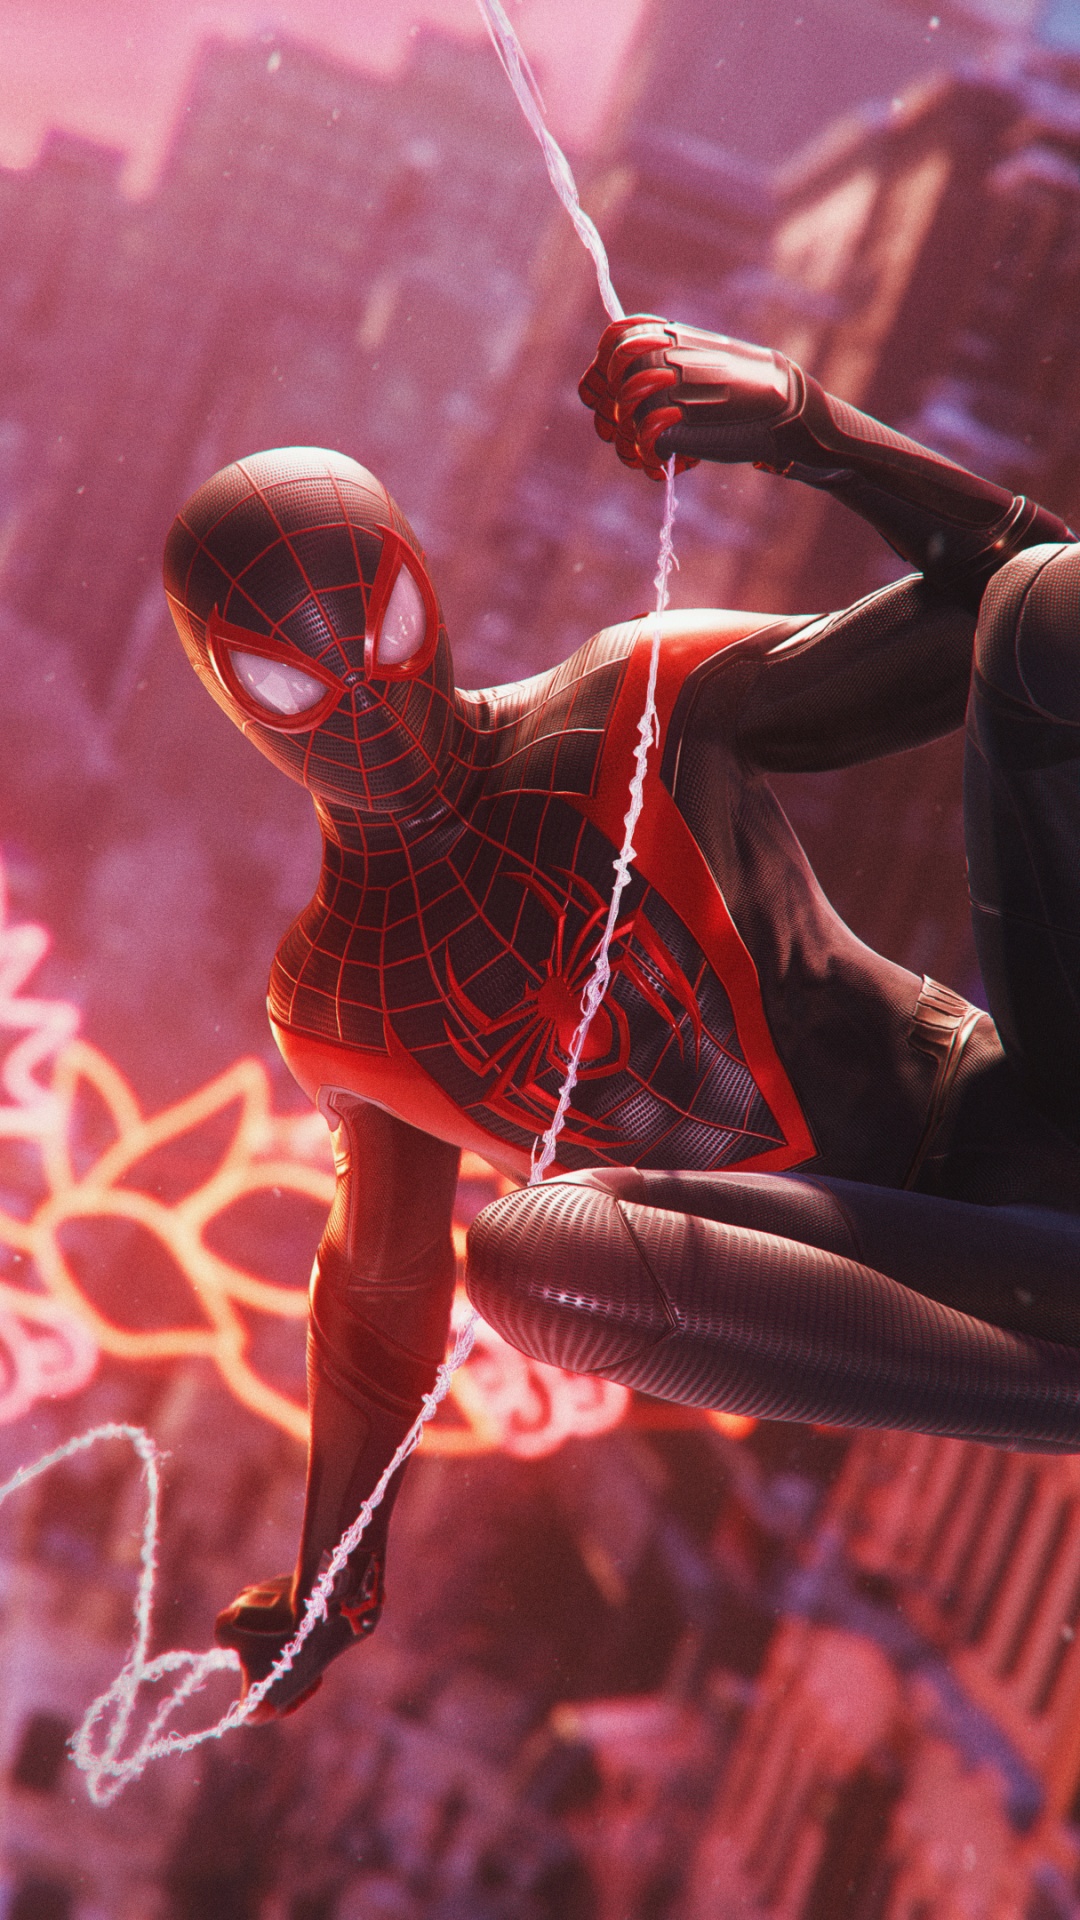 Spider-Man: Miles Morales 4K Wallpaper, PlayStation 5, 2020 Games